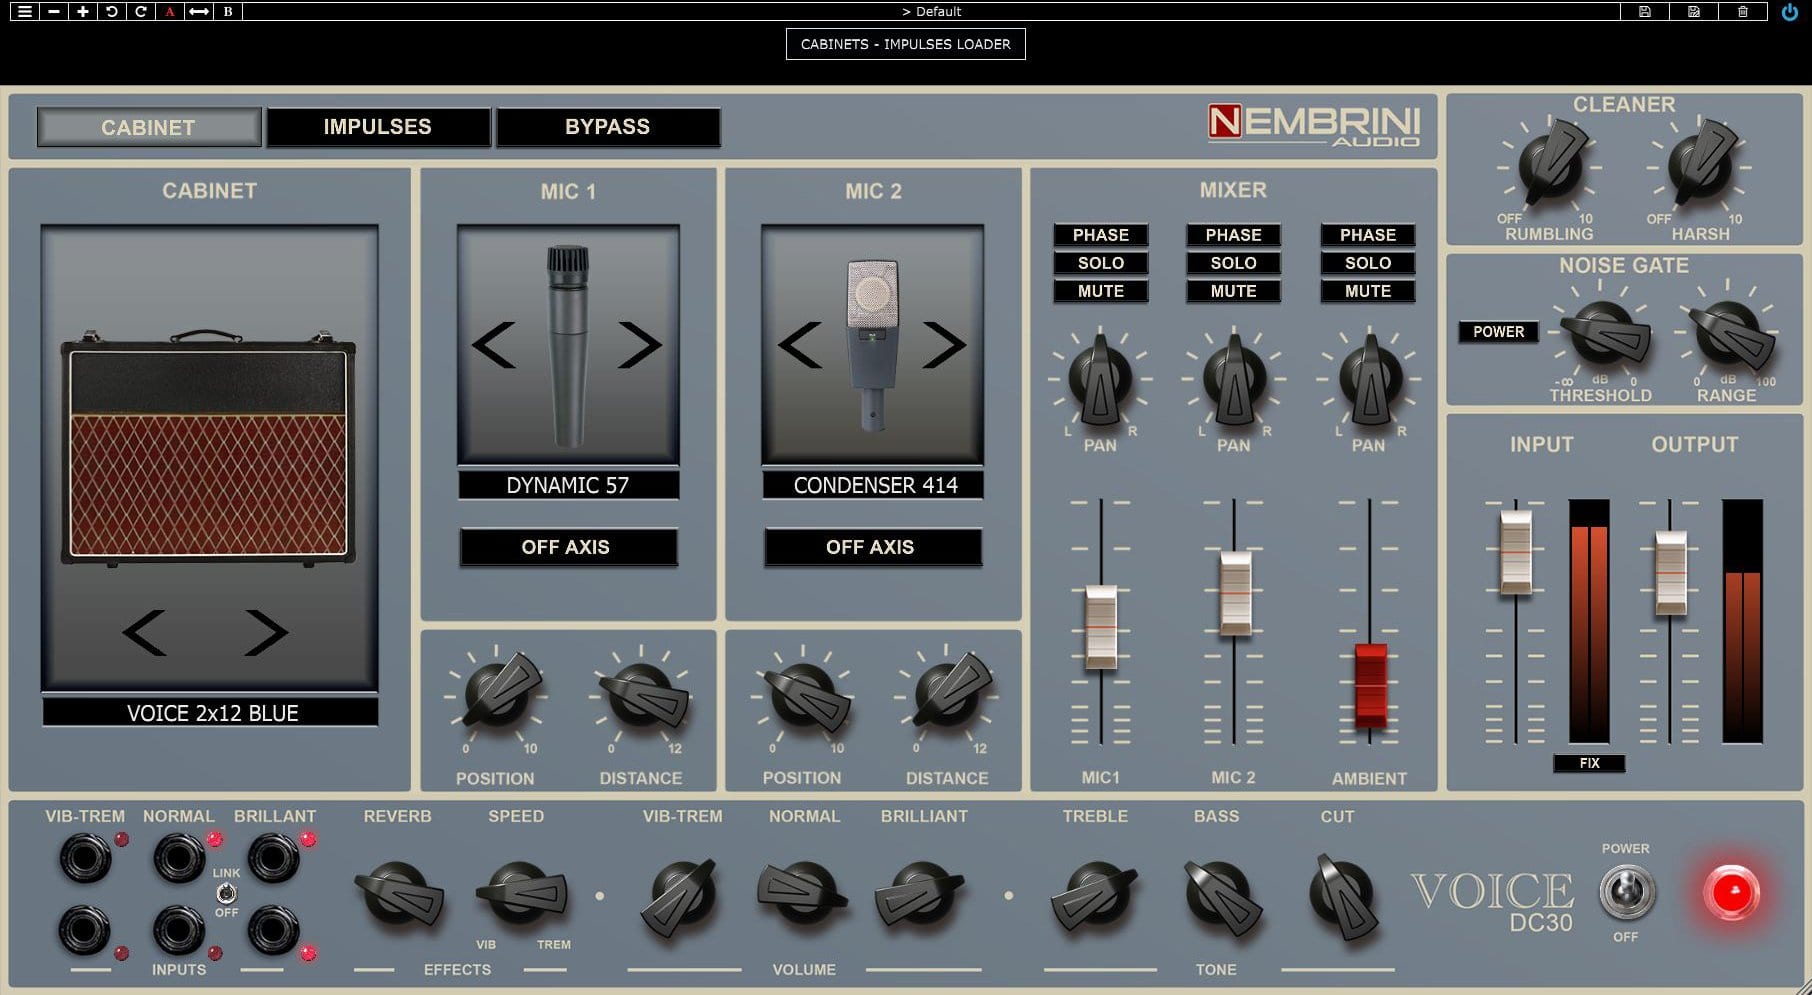 Nembrini Audio Voice DC30 Valve Guitar Amplifier Cabs, IRs & Mics